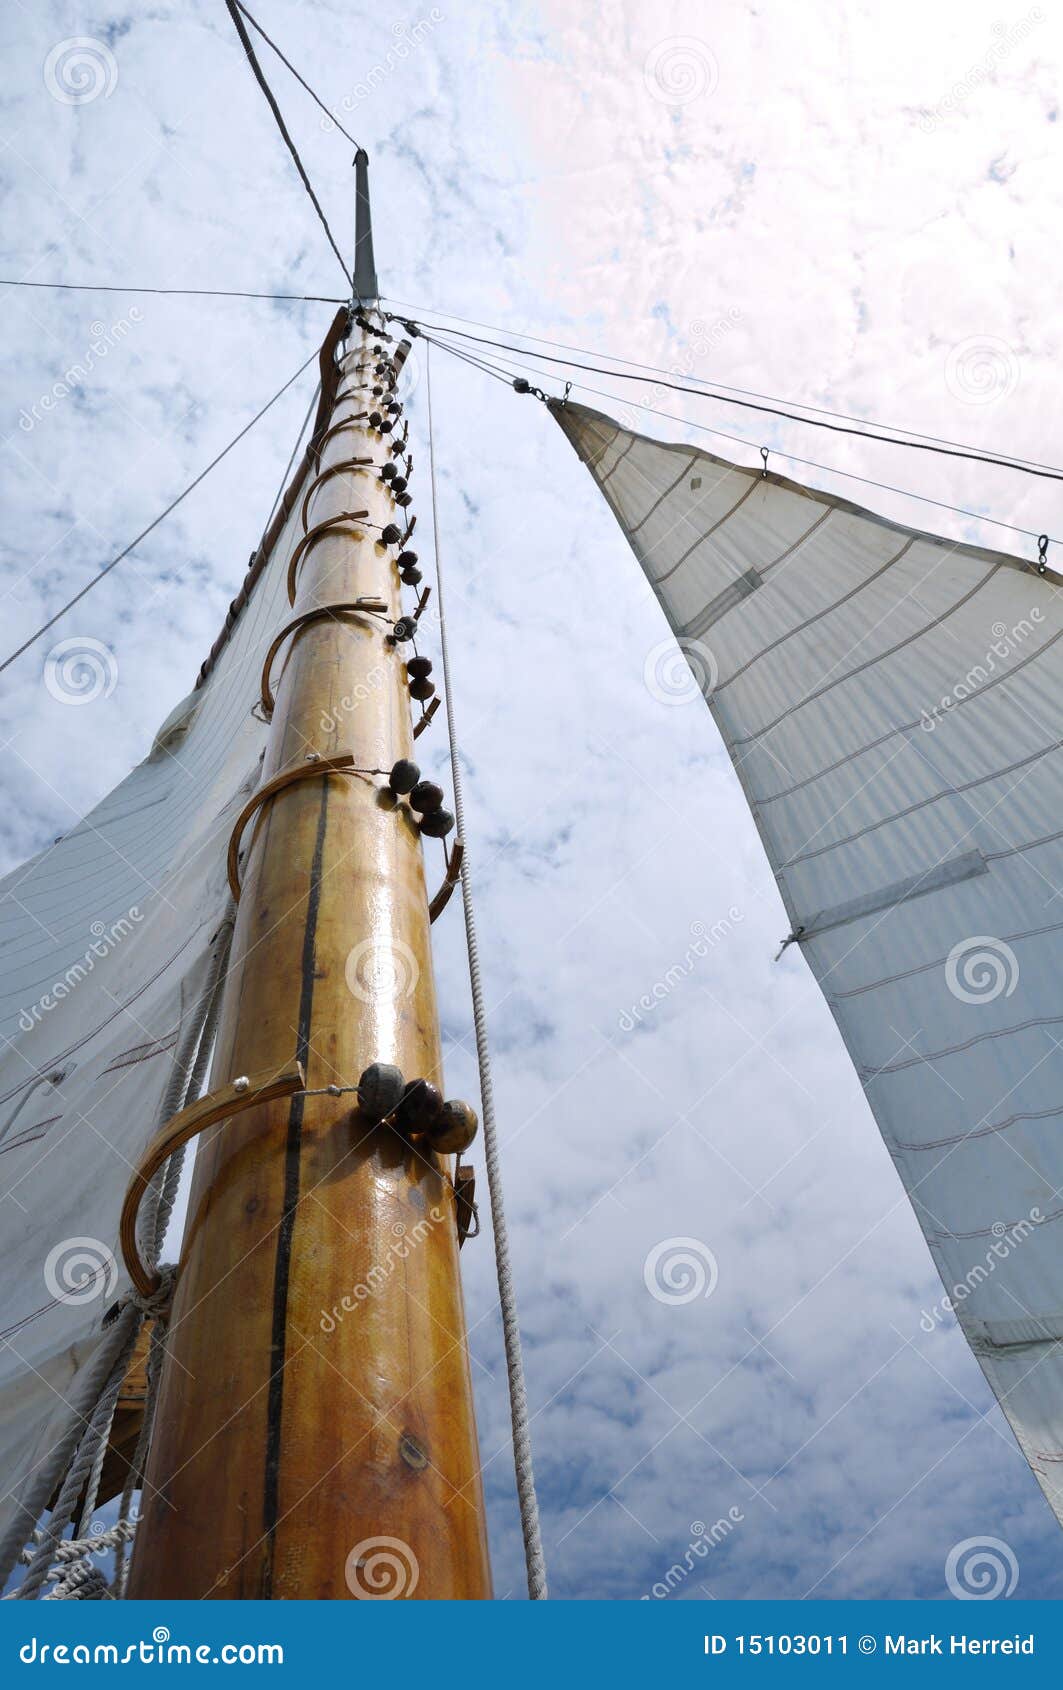 Jib And Wooden Mast Of Schooner Sailboat Stock Image 